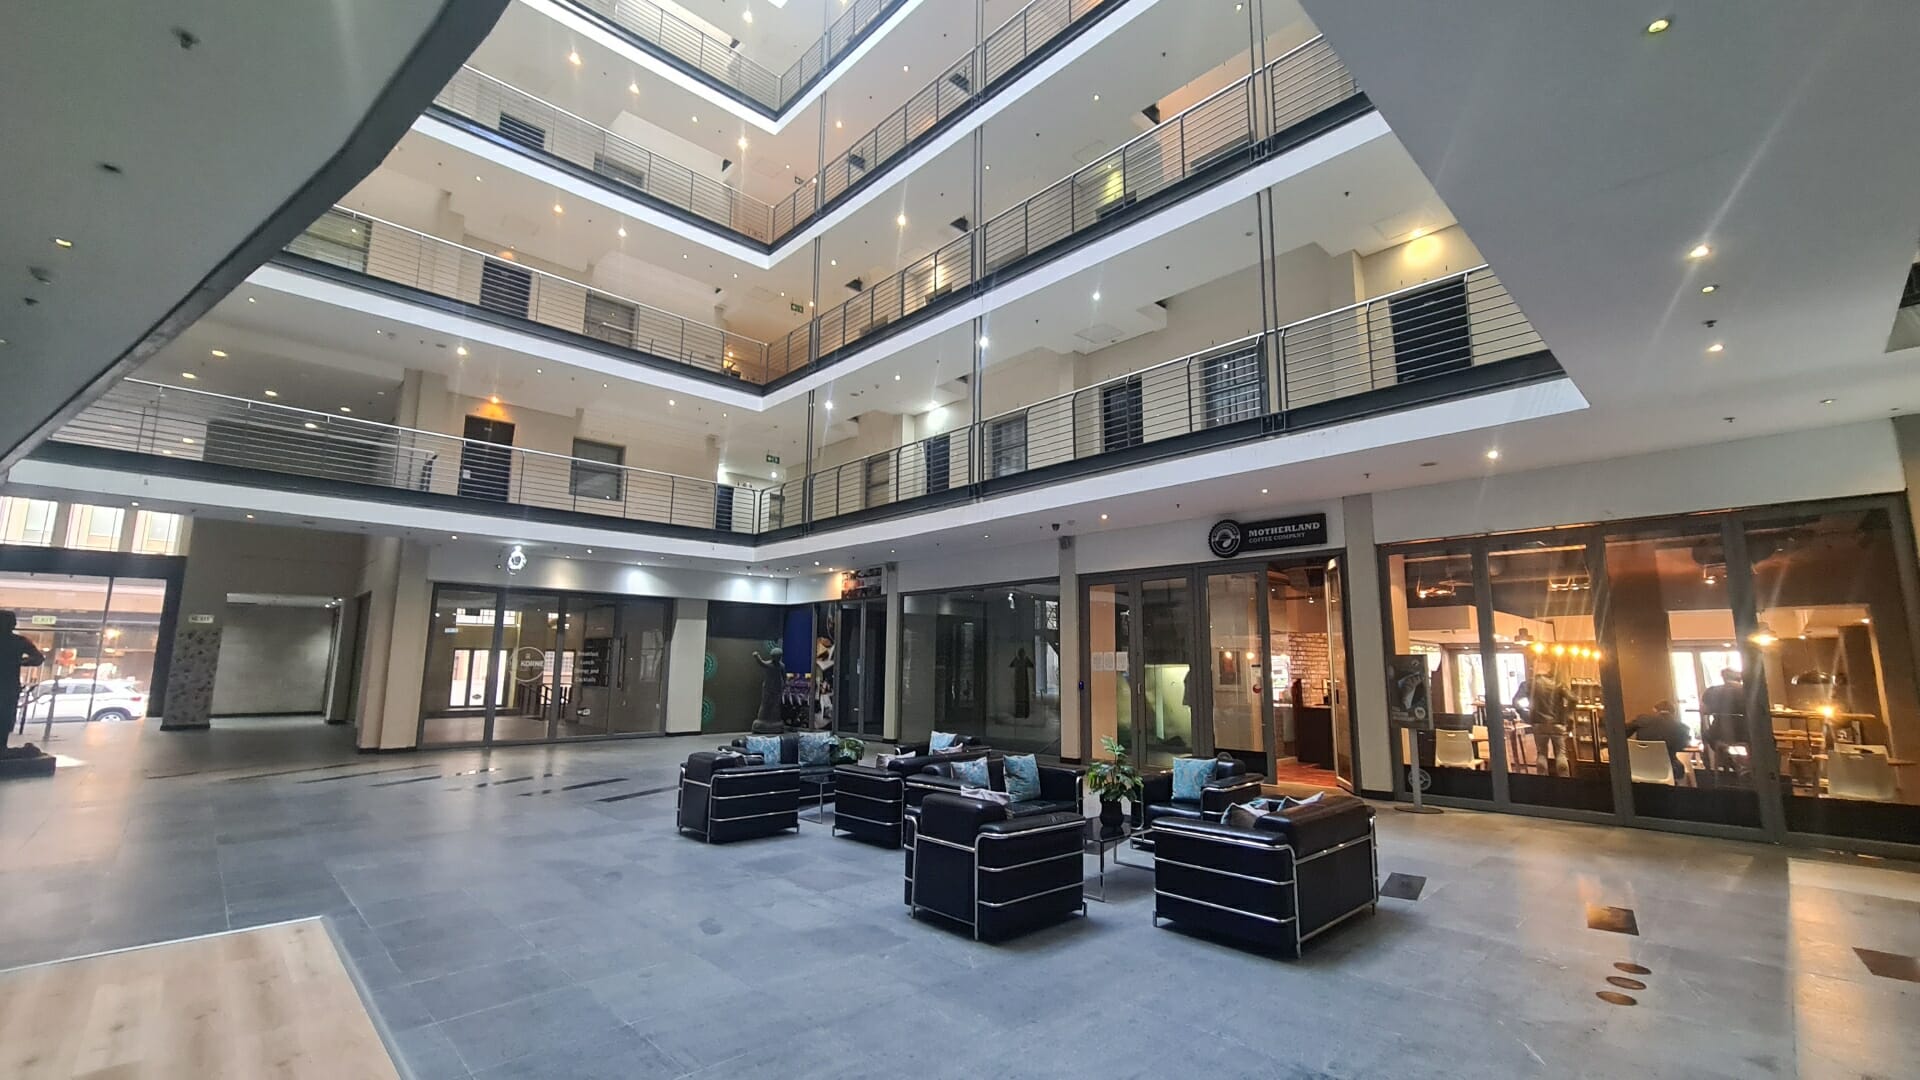 FOR SALE 580m² – Mandela Rhodes Place Premium office space for sale in CBD